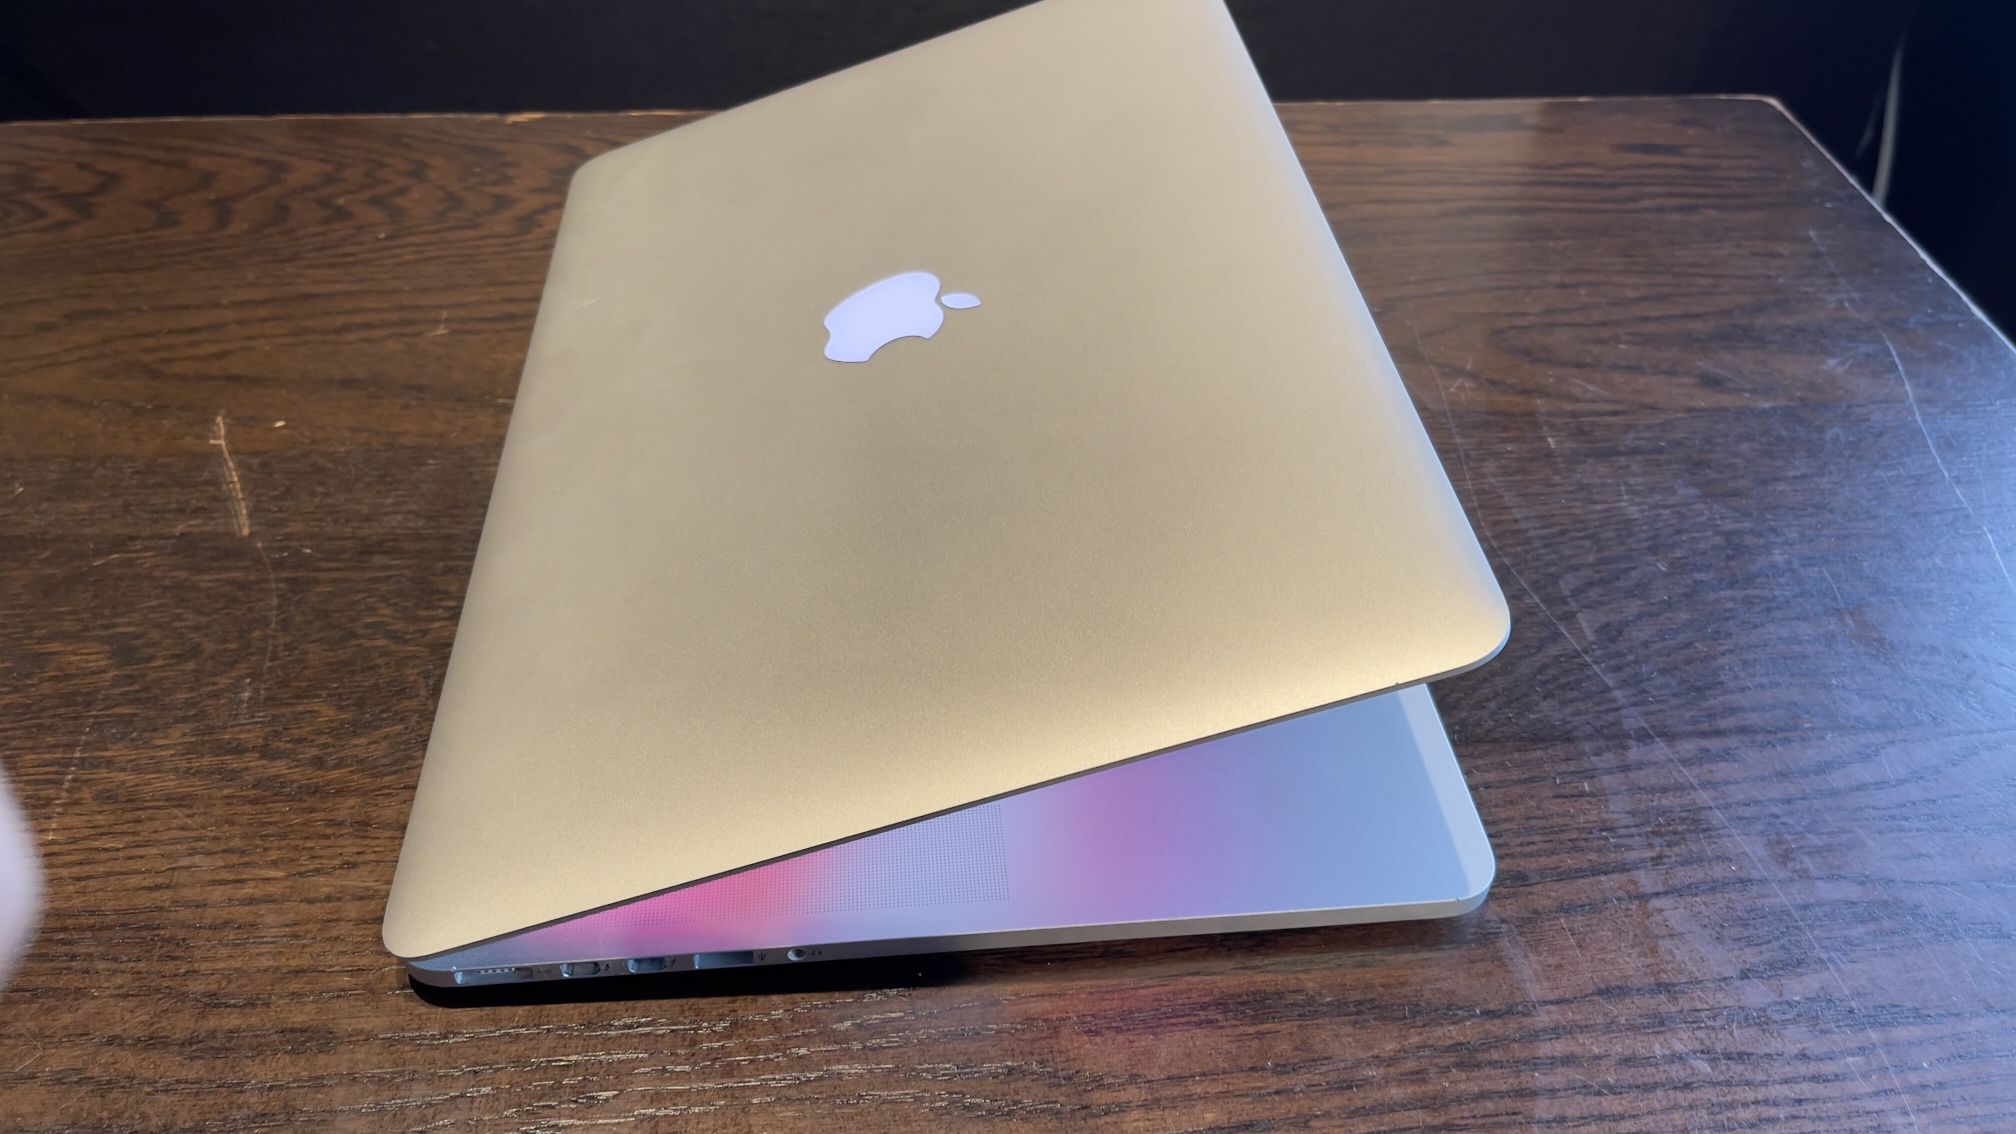 Apple MacBook Pro 15” Retina Core I7, 16GB RAM 256Gb SSD $375